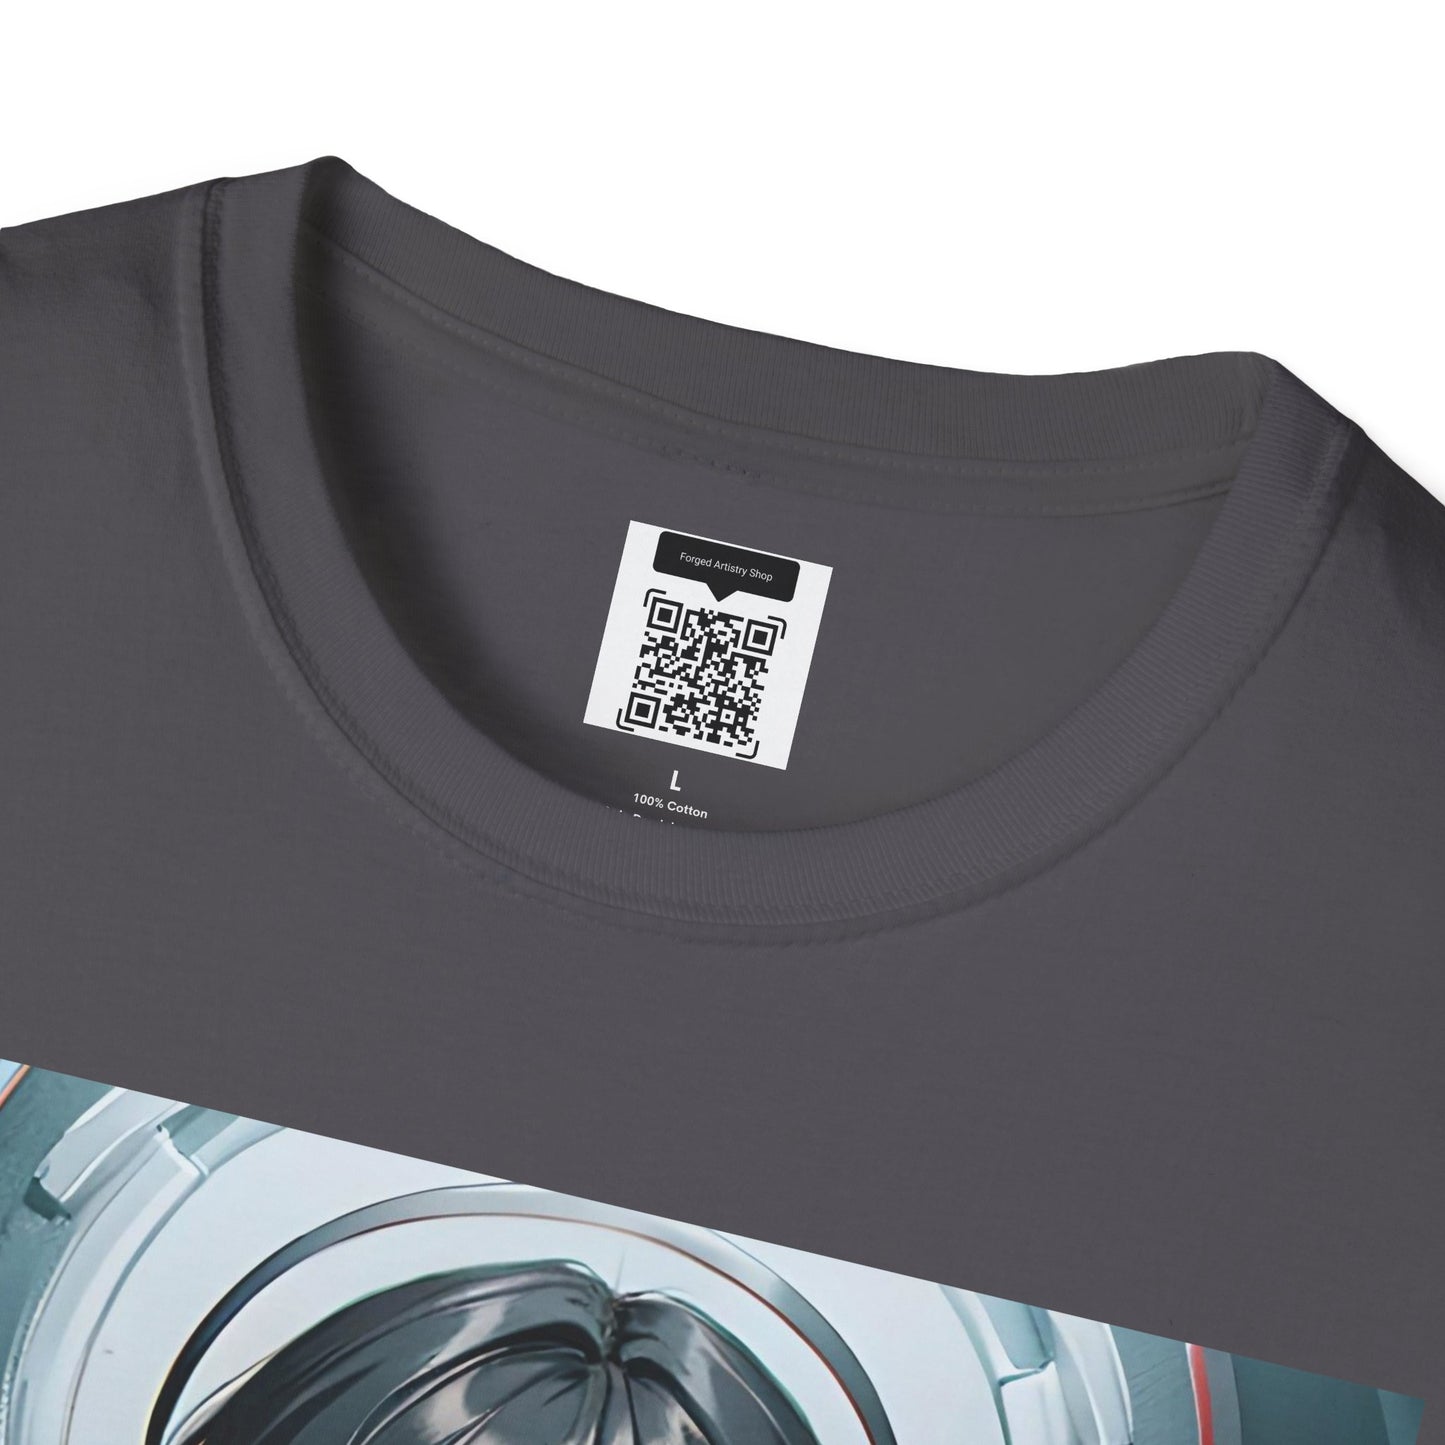 ADA-6 Unisex Softstyle T-Shirt